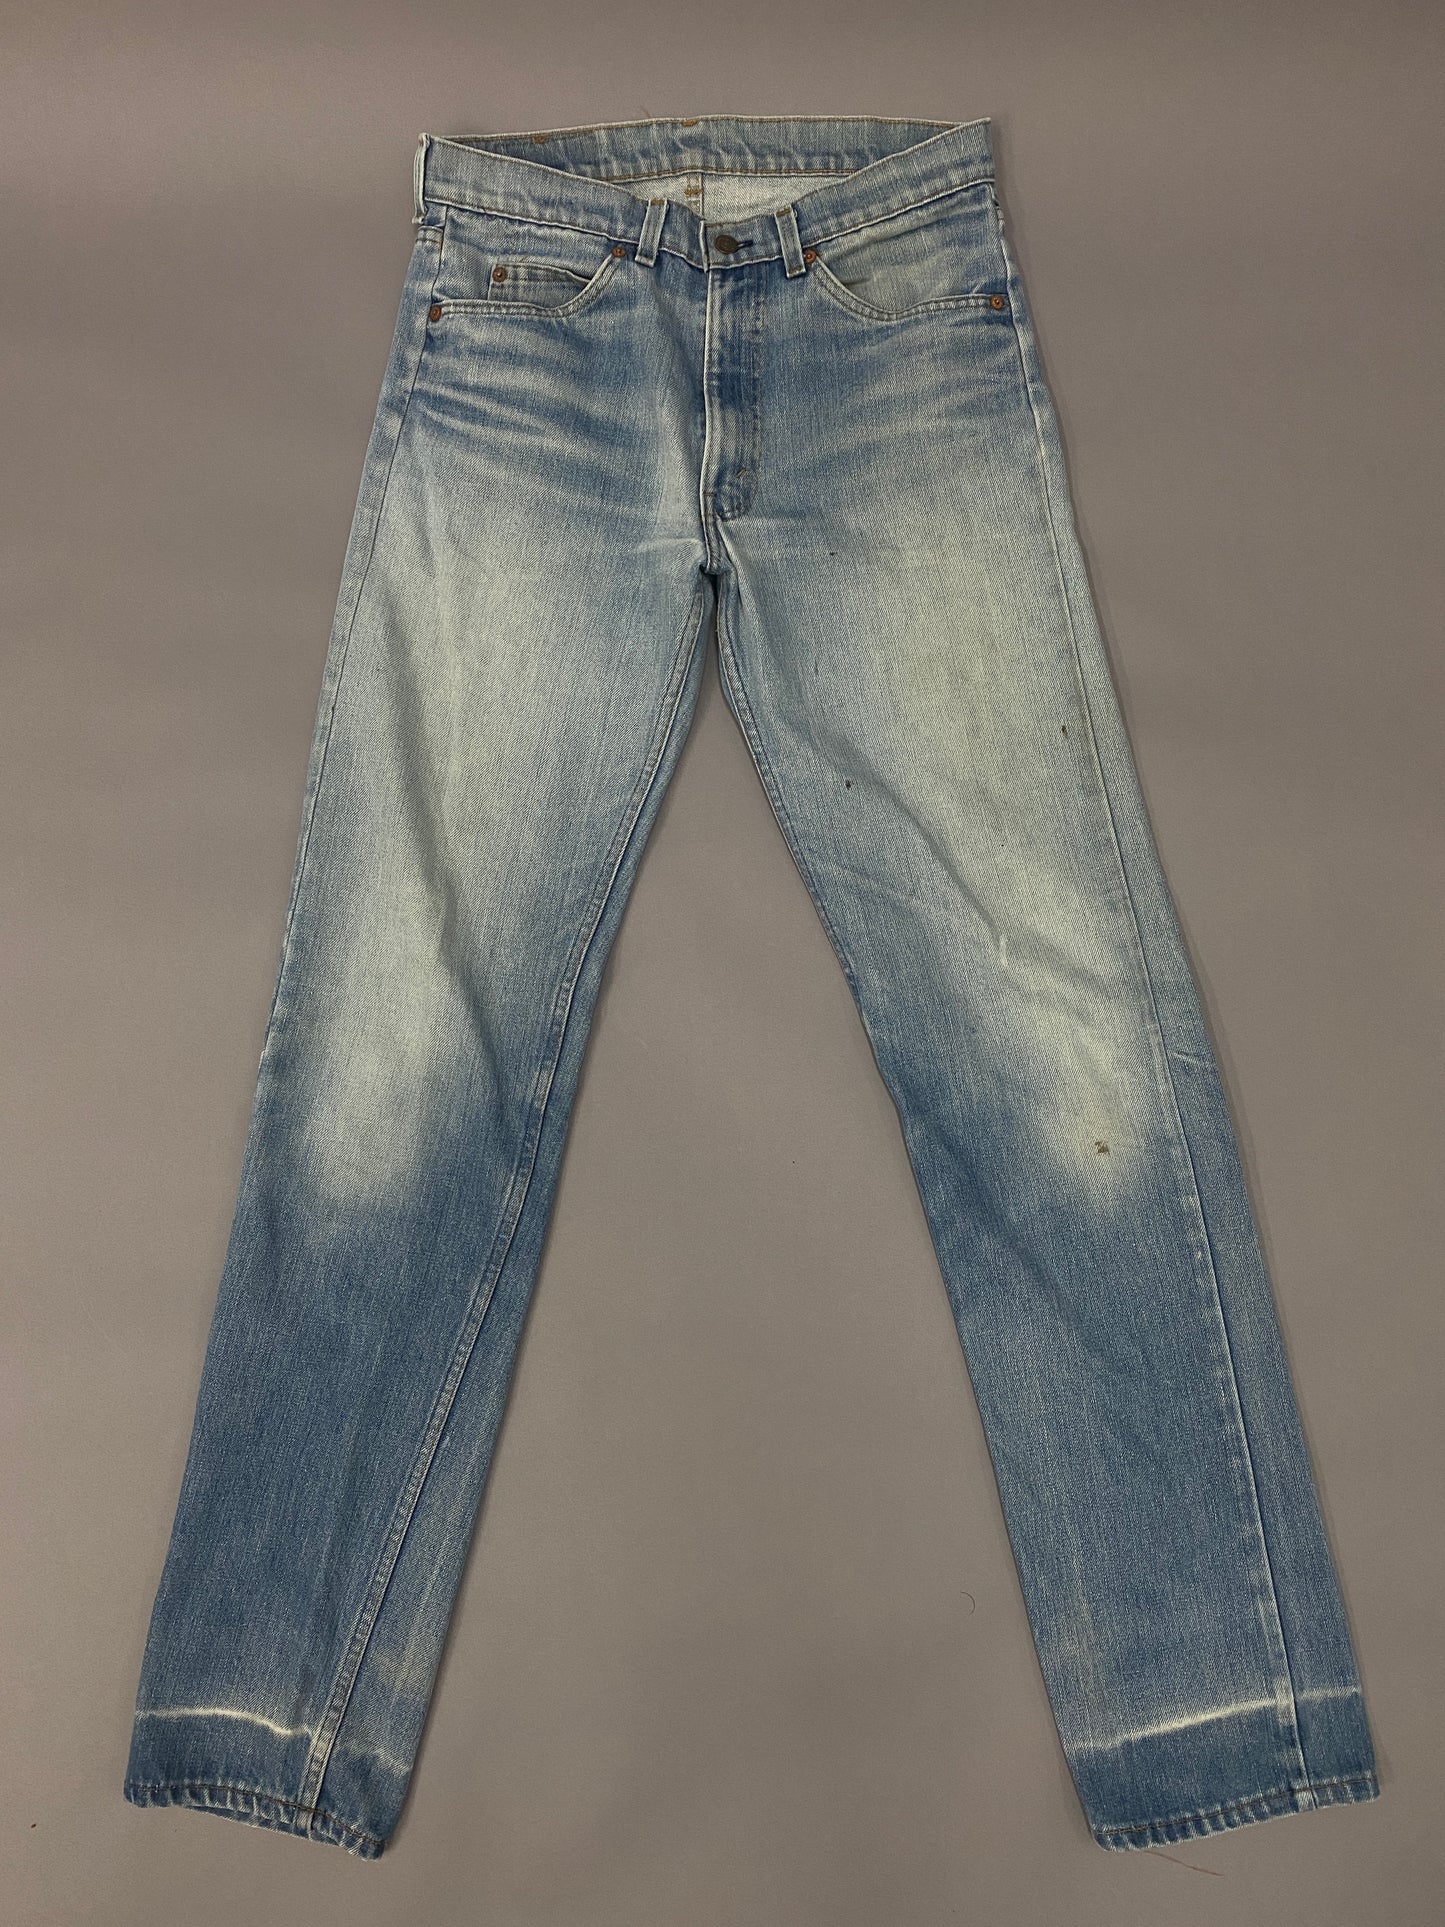 Levi's 505 Orange Tab Jeans - 32 x 36